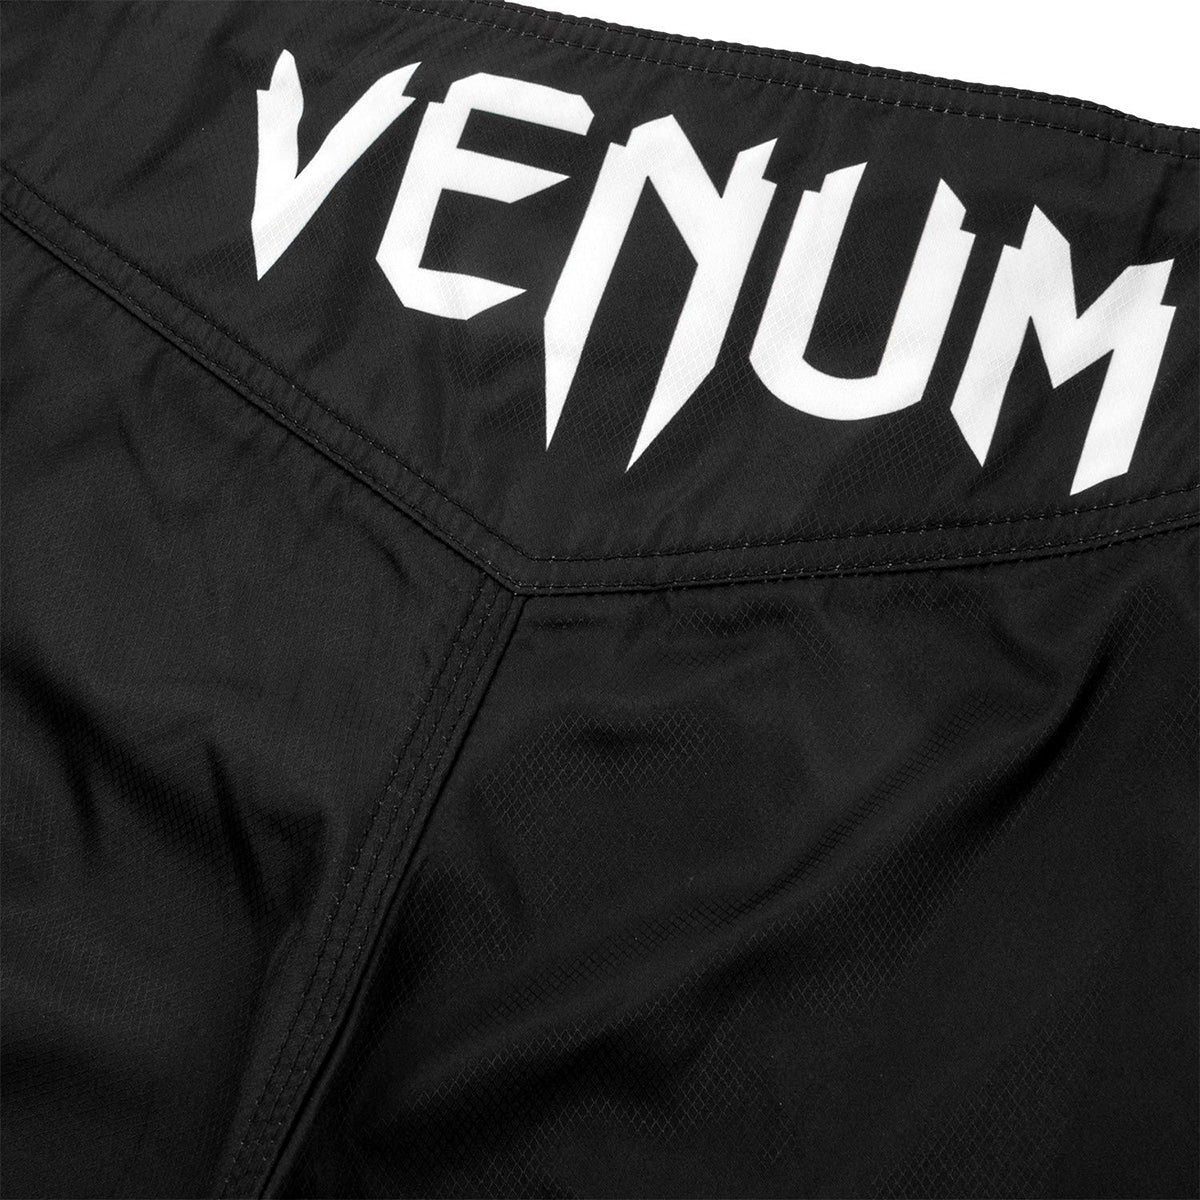 Venum Light 3.0 MMA Fight Shorts Venum